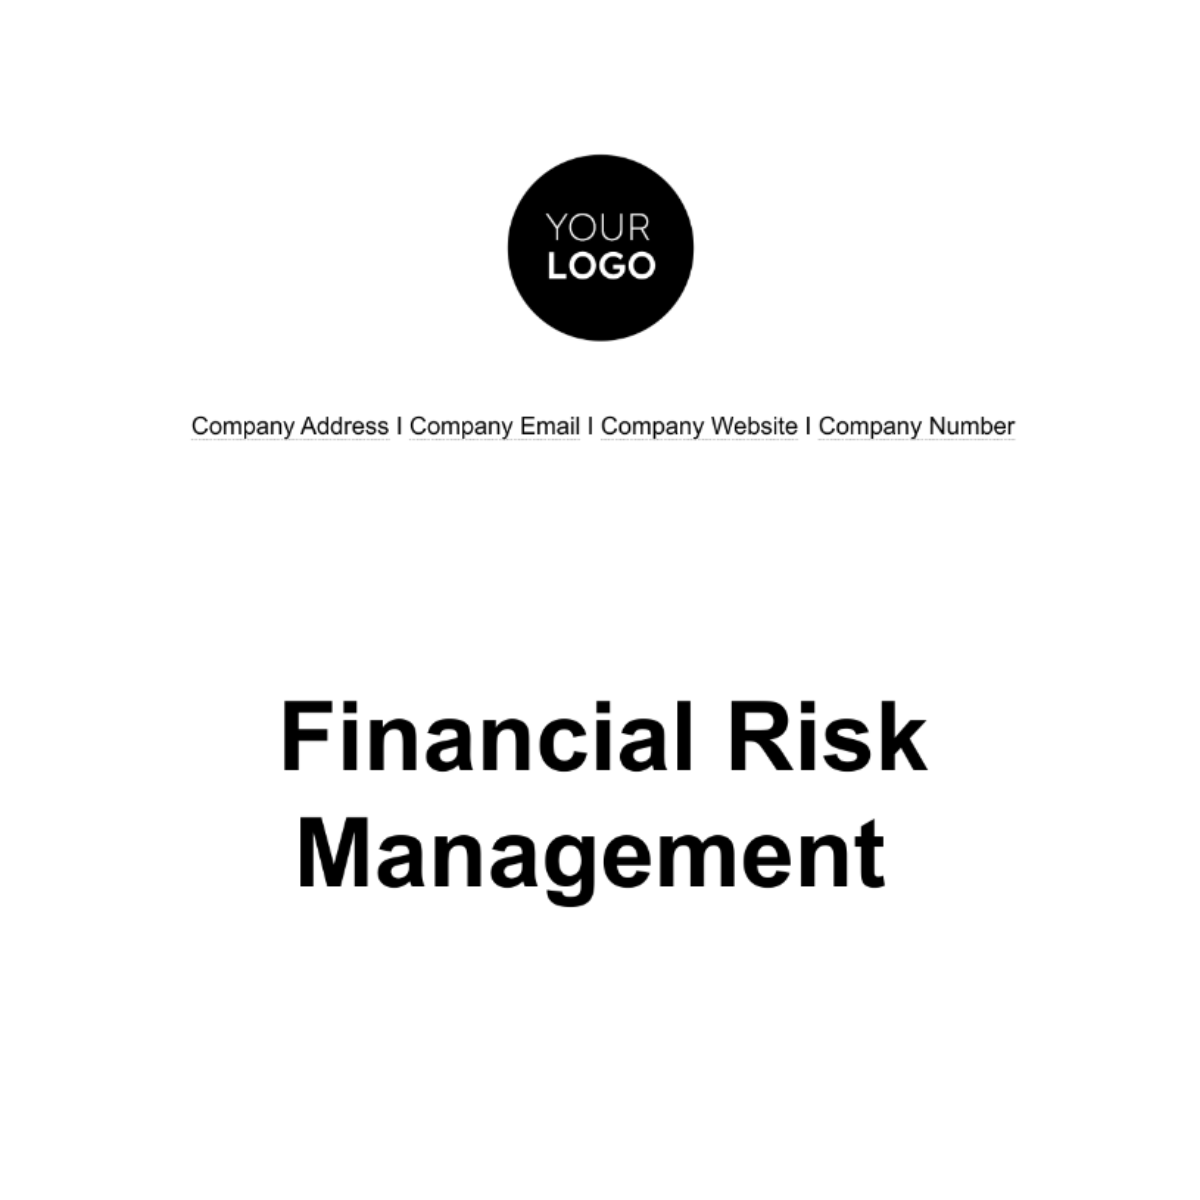 Financial Risk Management Template